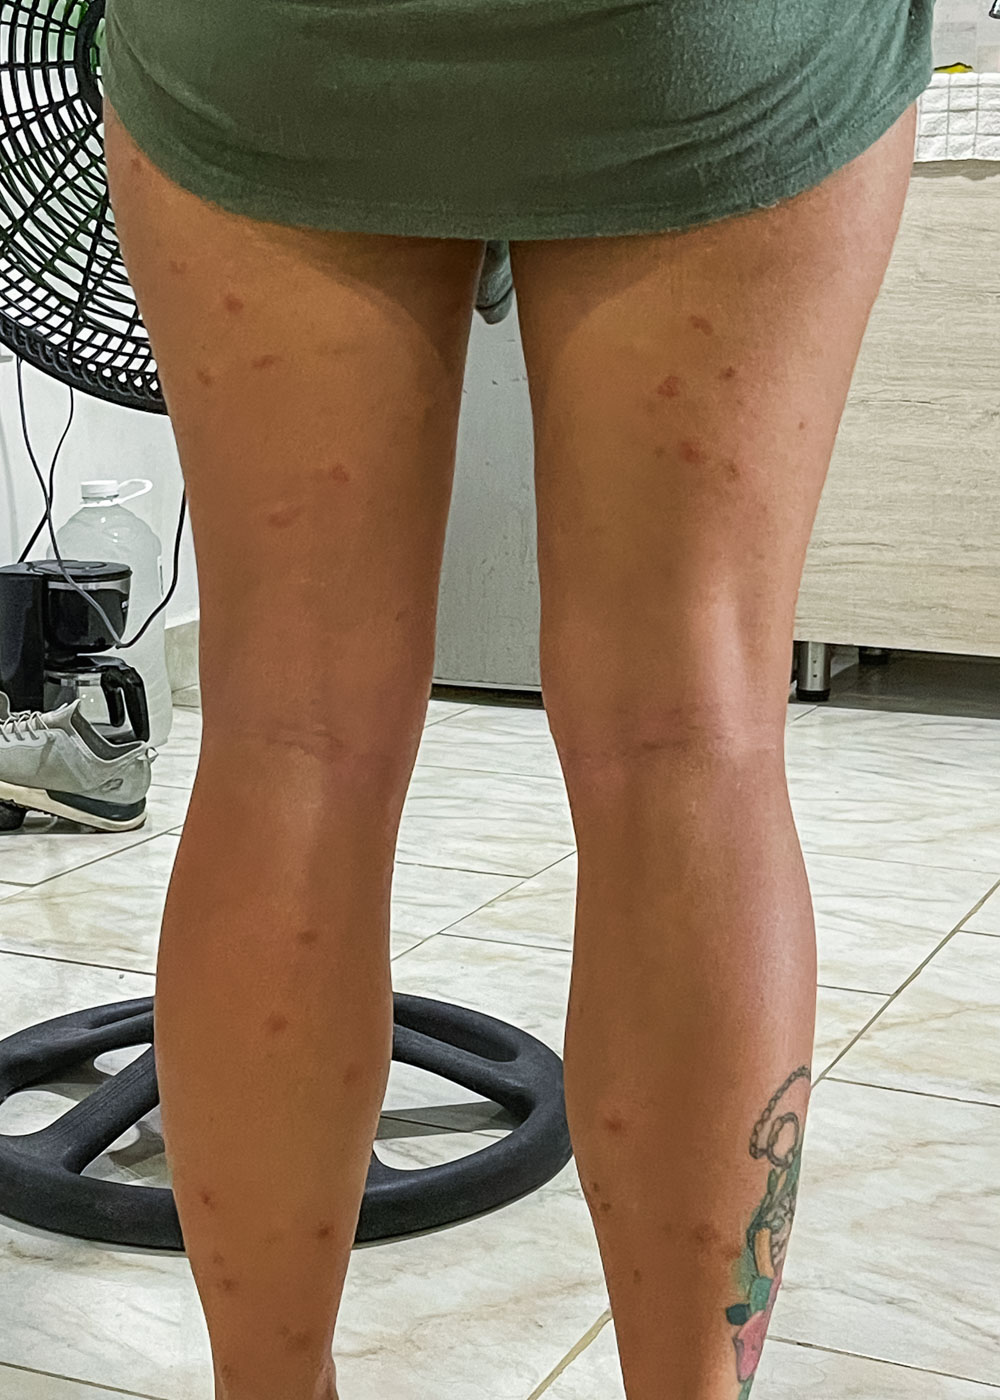 Multiple mosquito bites covering both of Sara's legs.